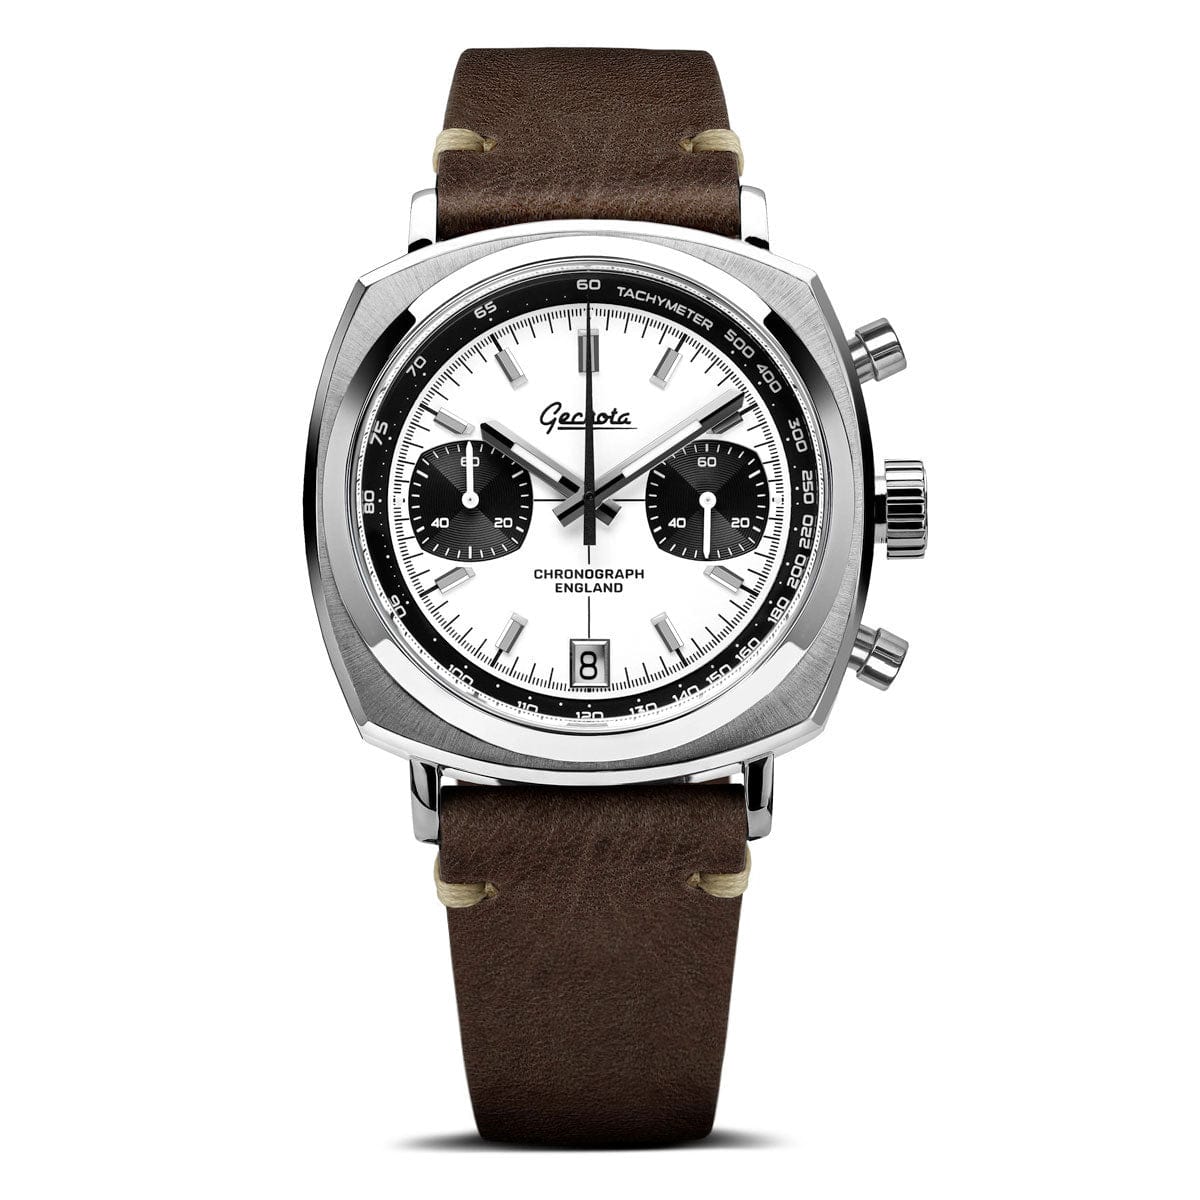 Geckota Chronotimer Racing Chronograph Watch White Dial Classic Panda VS-369-2 - NEARLY NEW